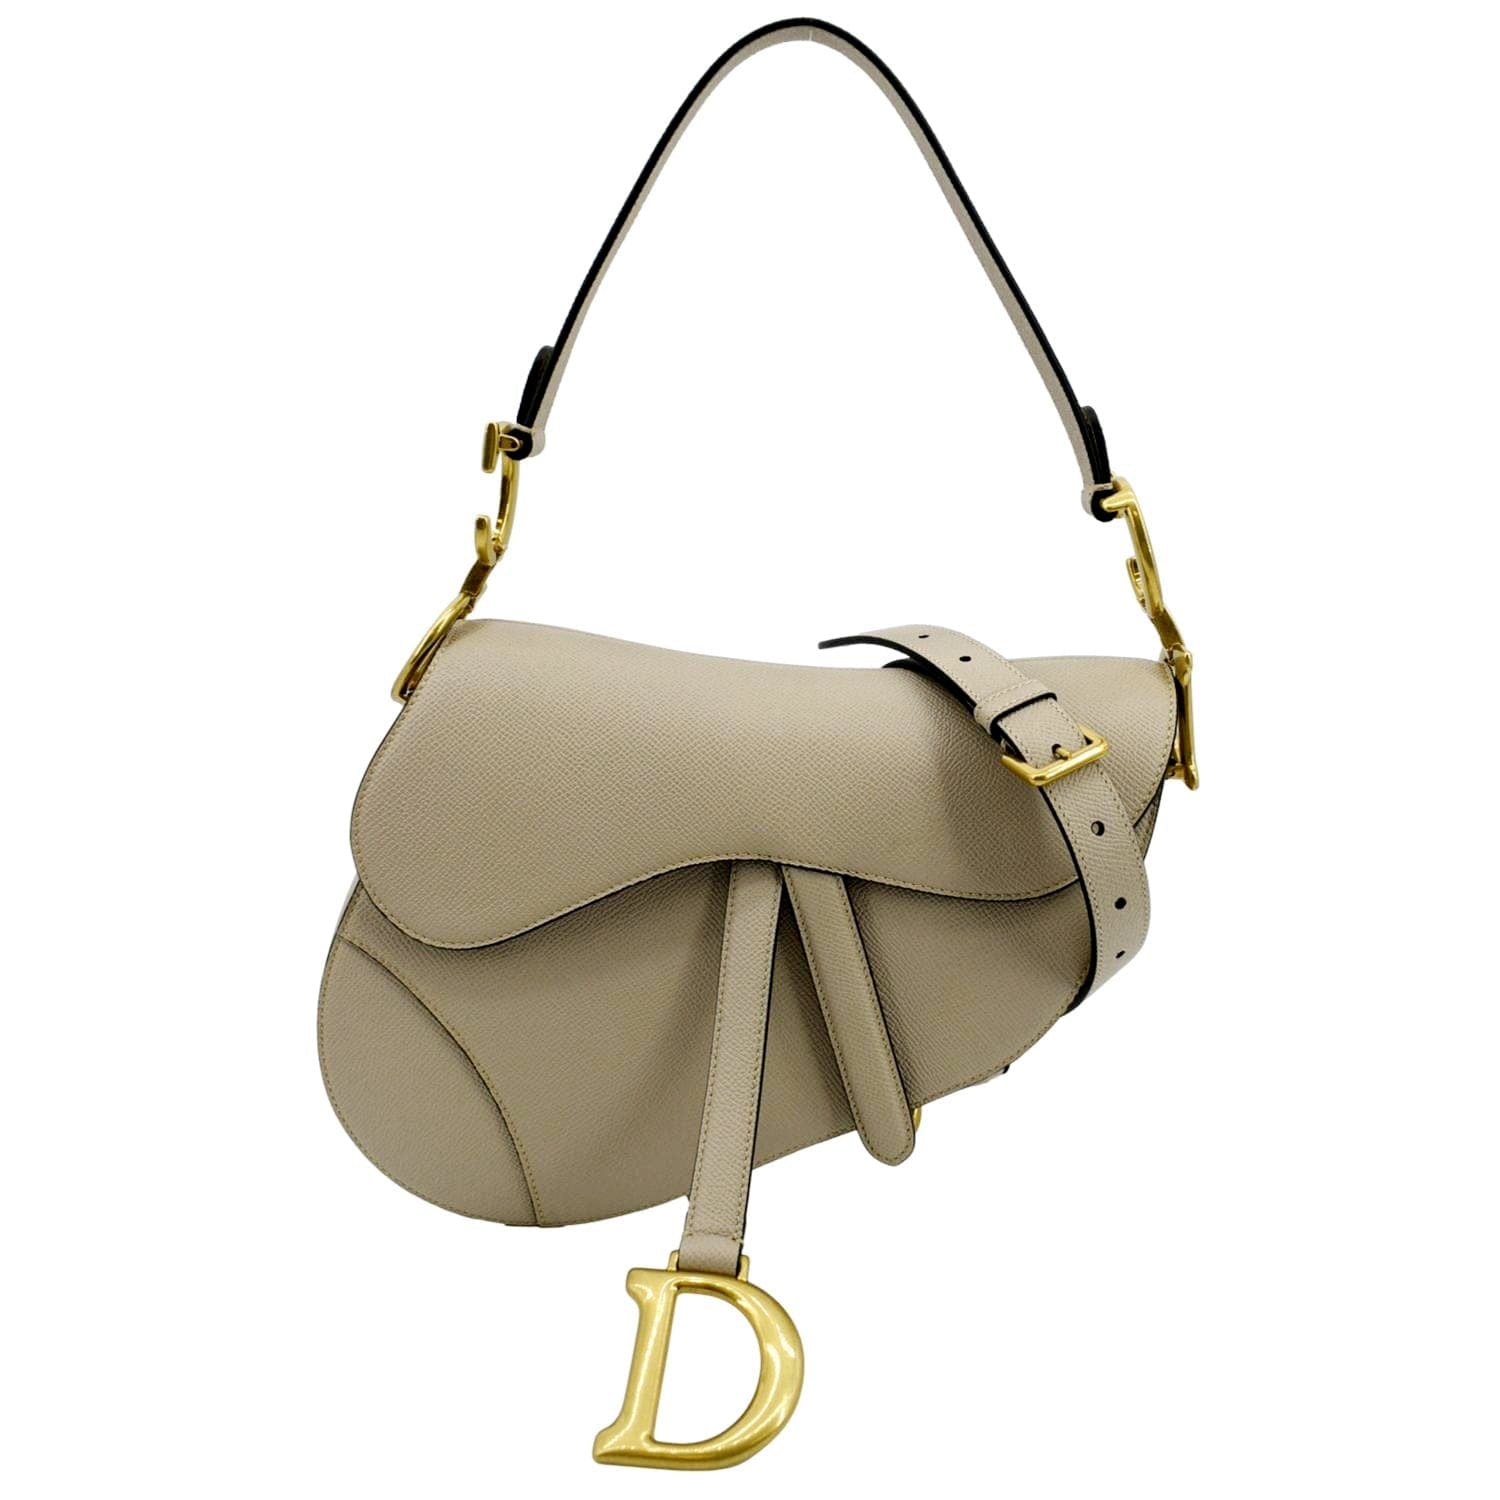 Christian Dior Calf Leather Handbags